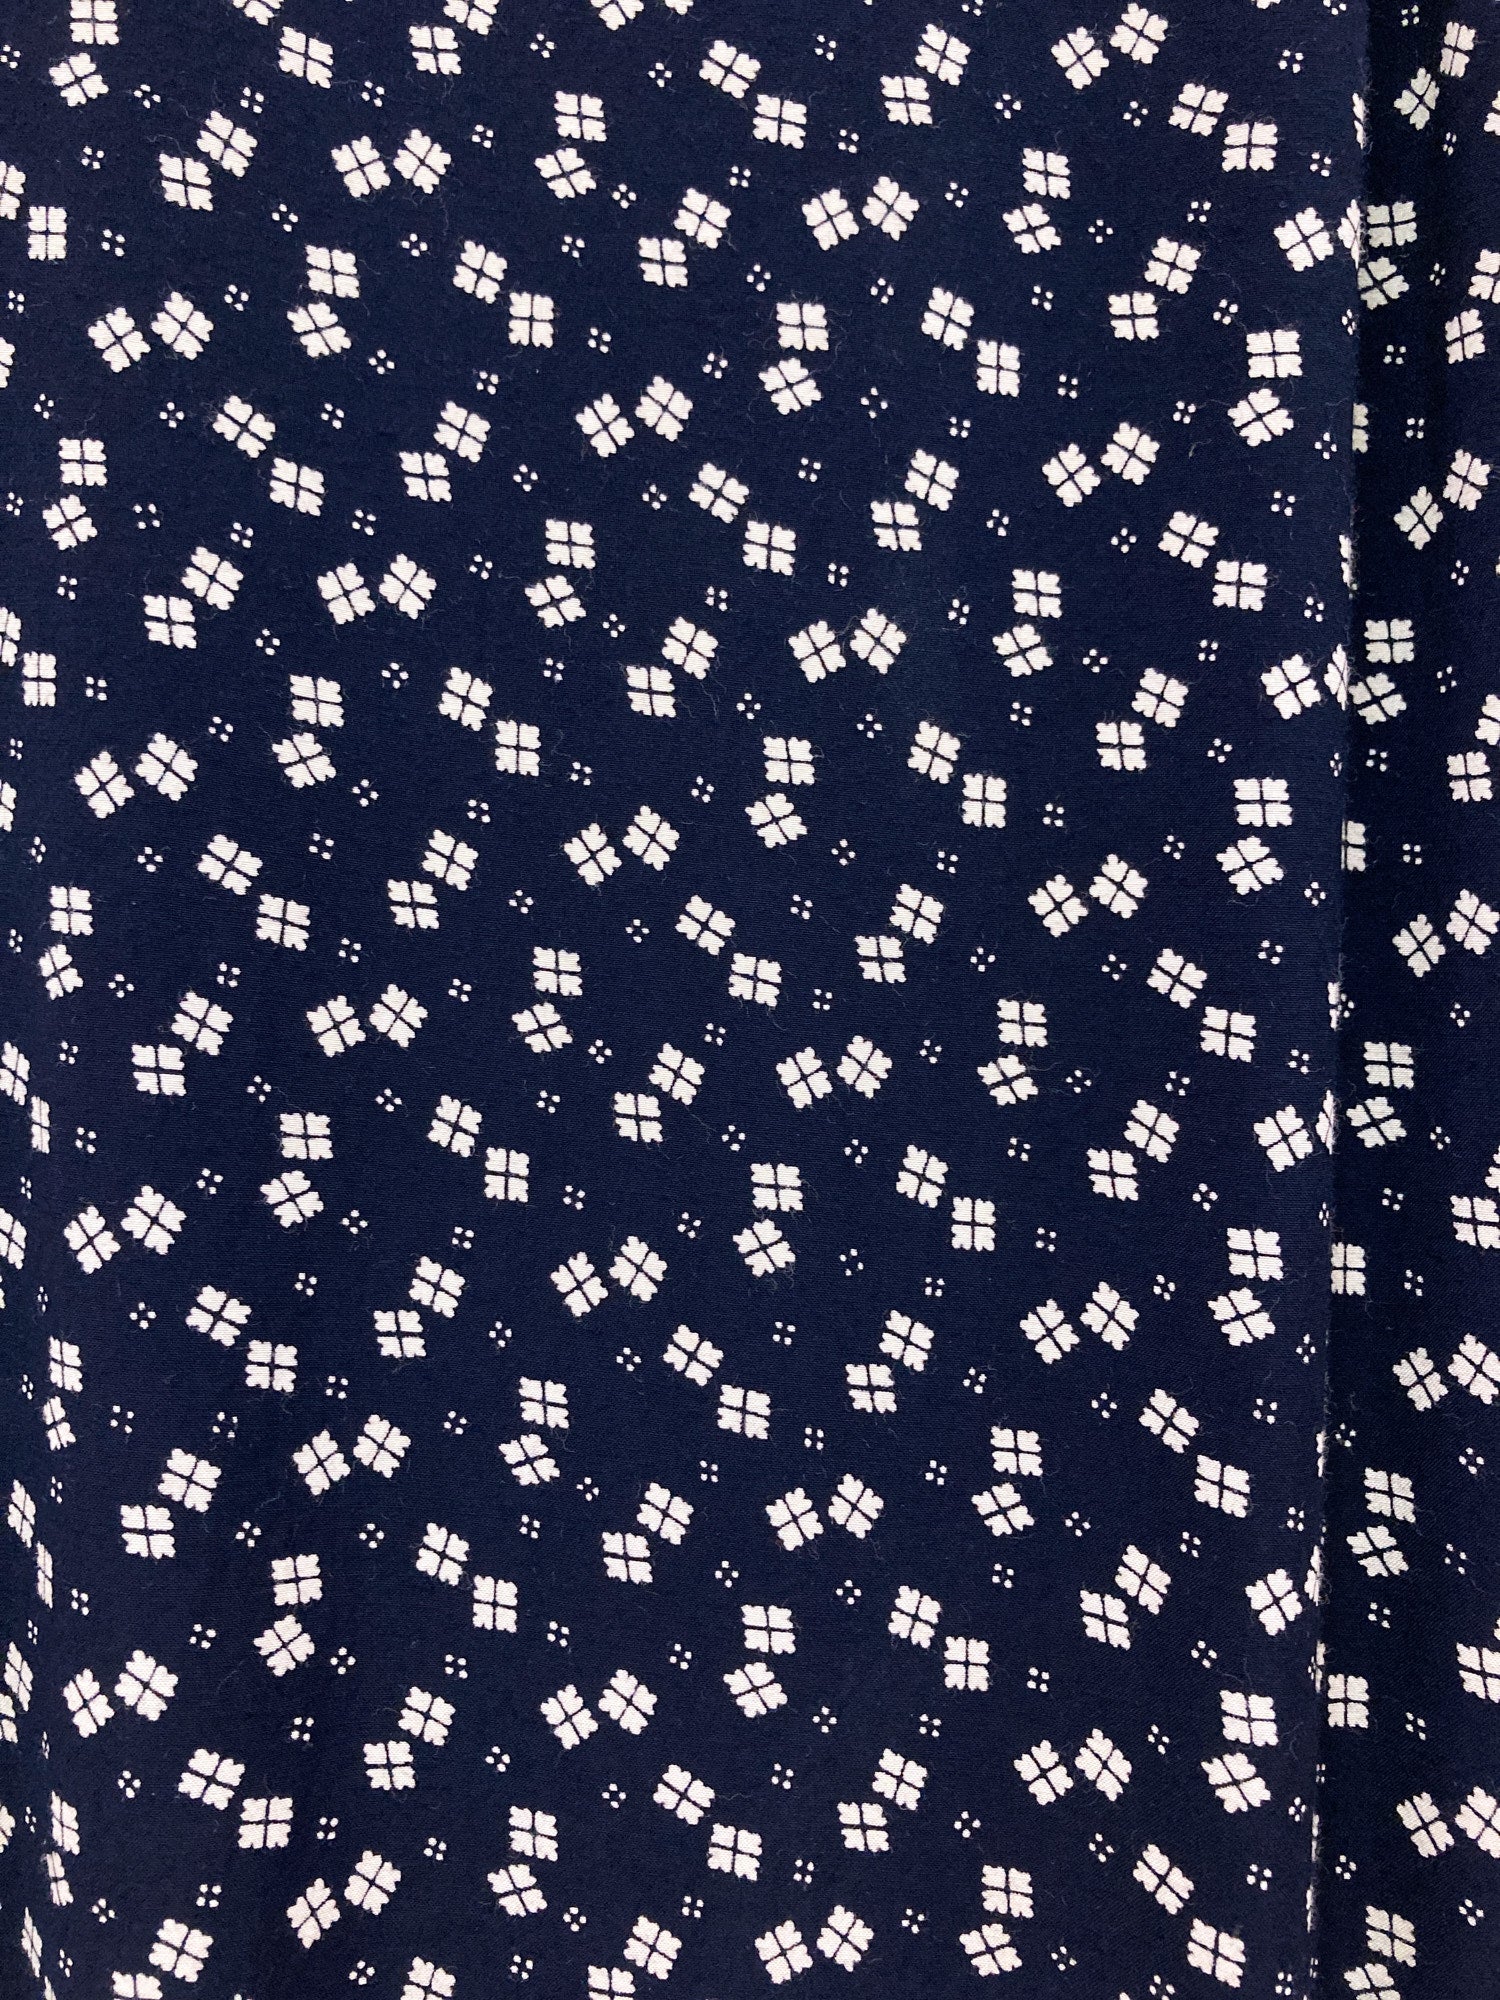 Robe de Chambre Comme des Garcons 1992 navy rayon square pattern camisole dress